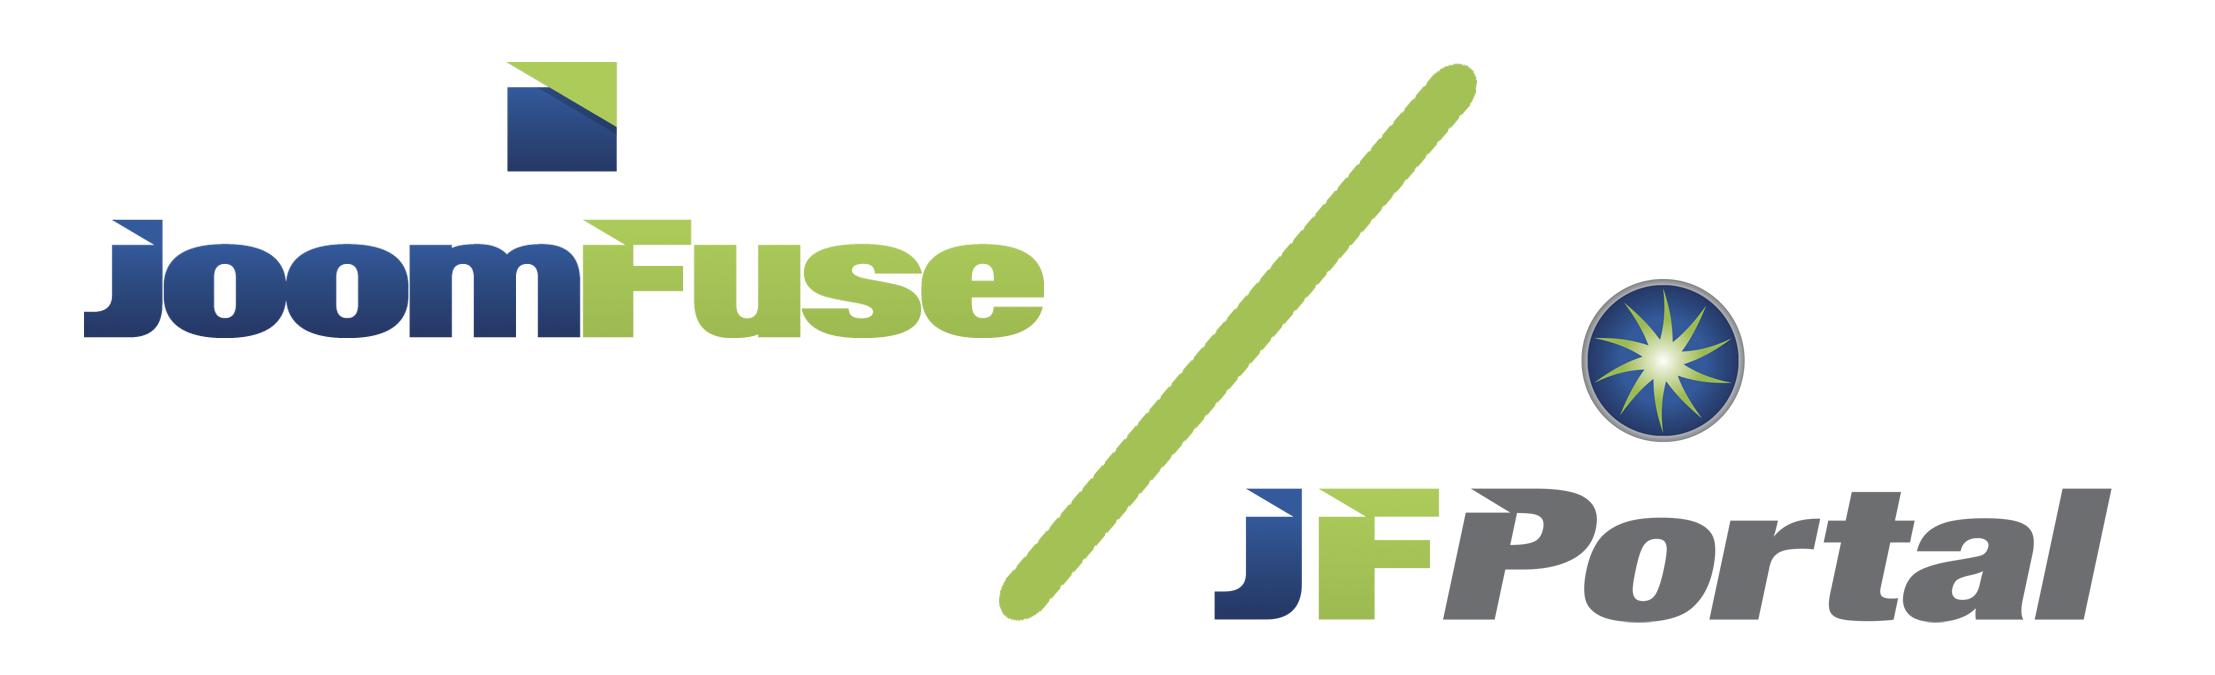 JoomFuse JFPortal logos